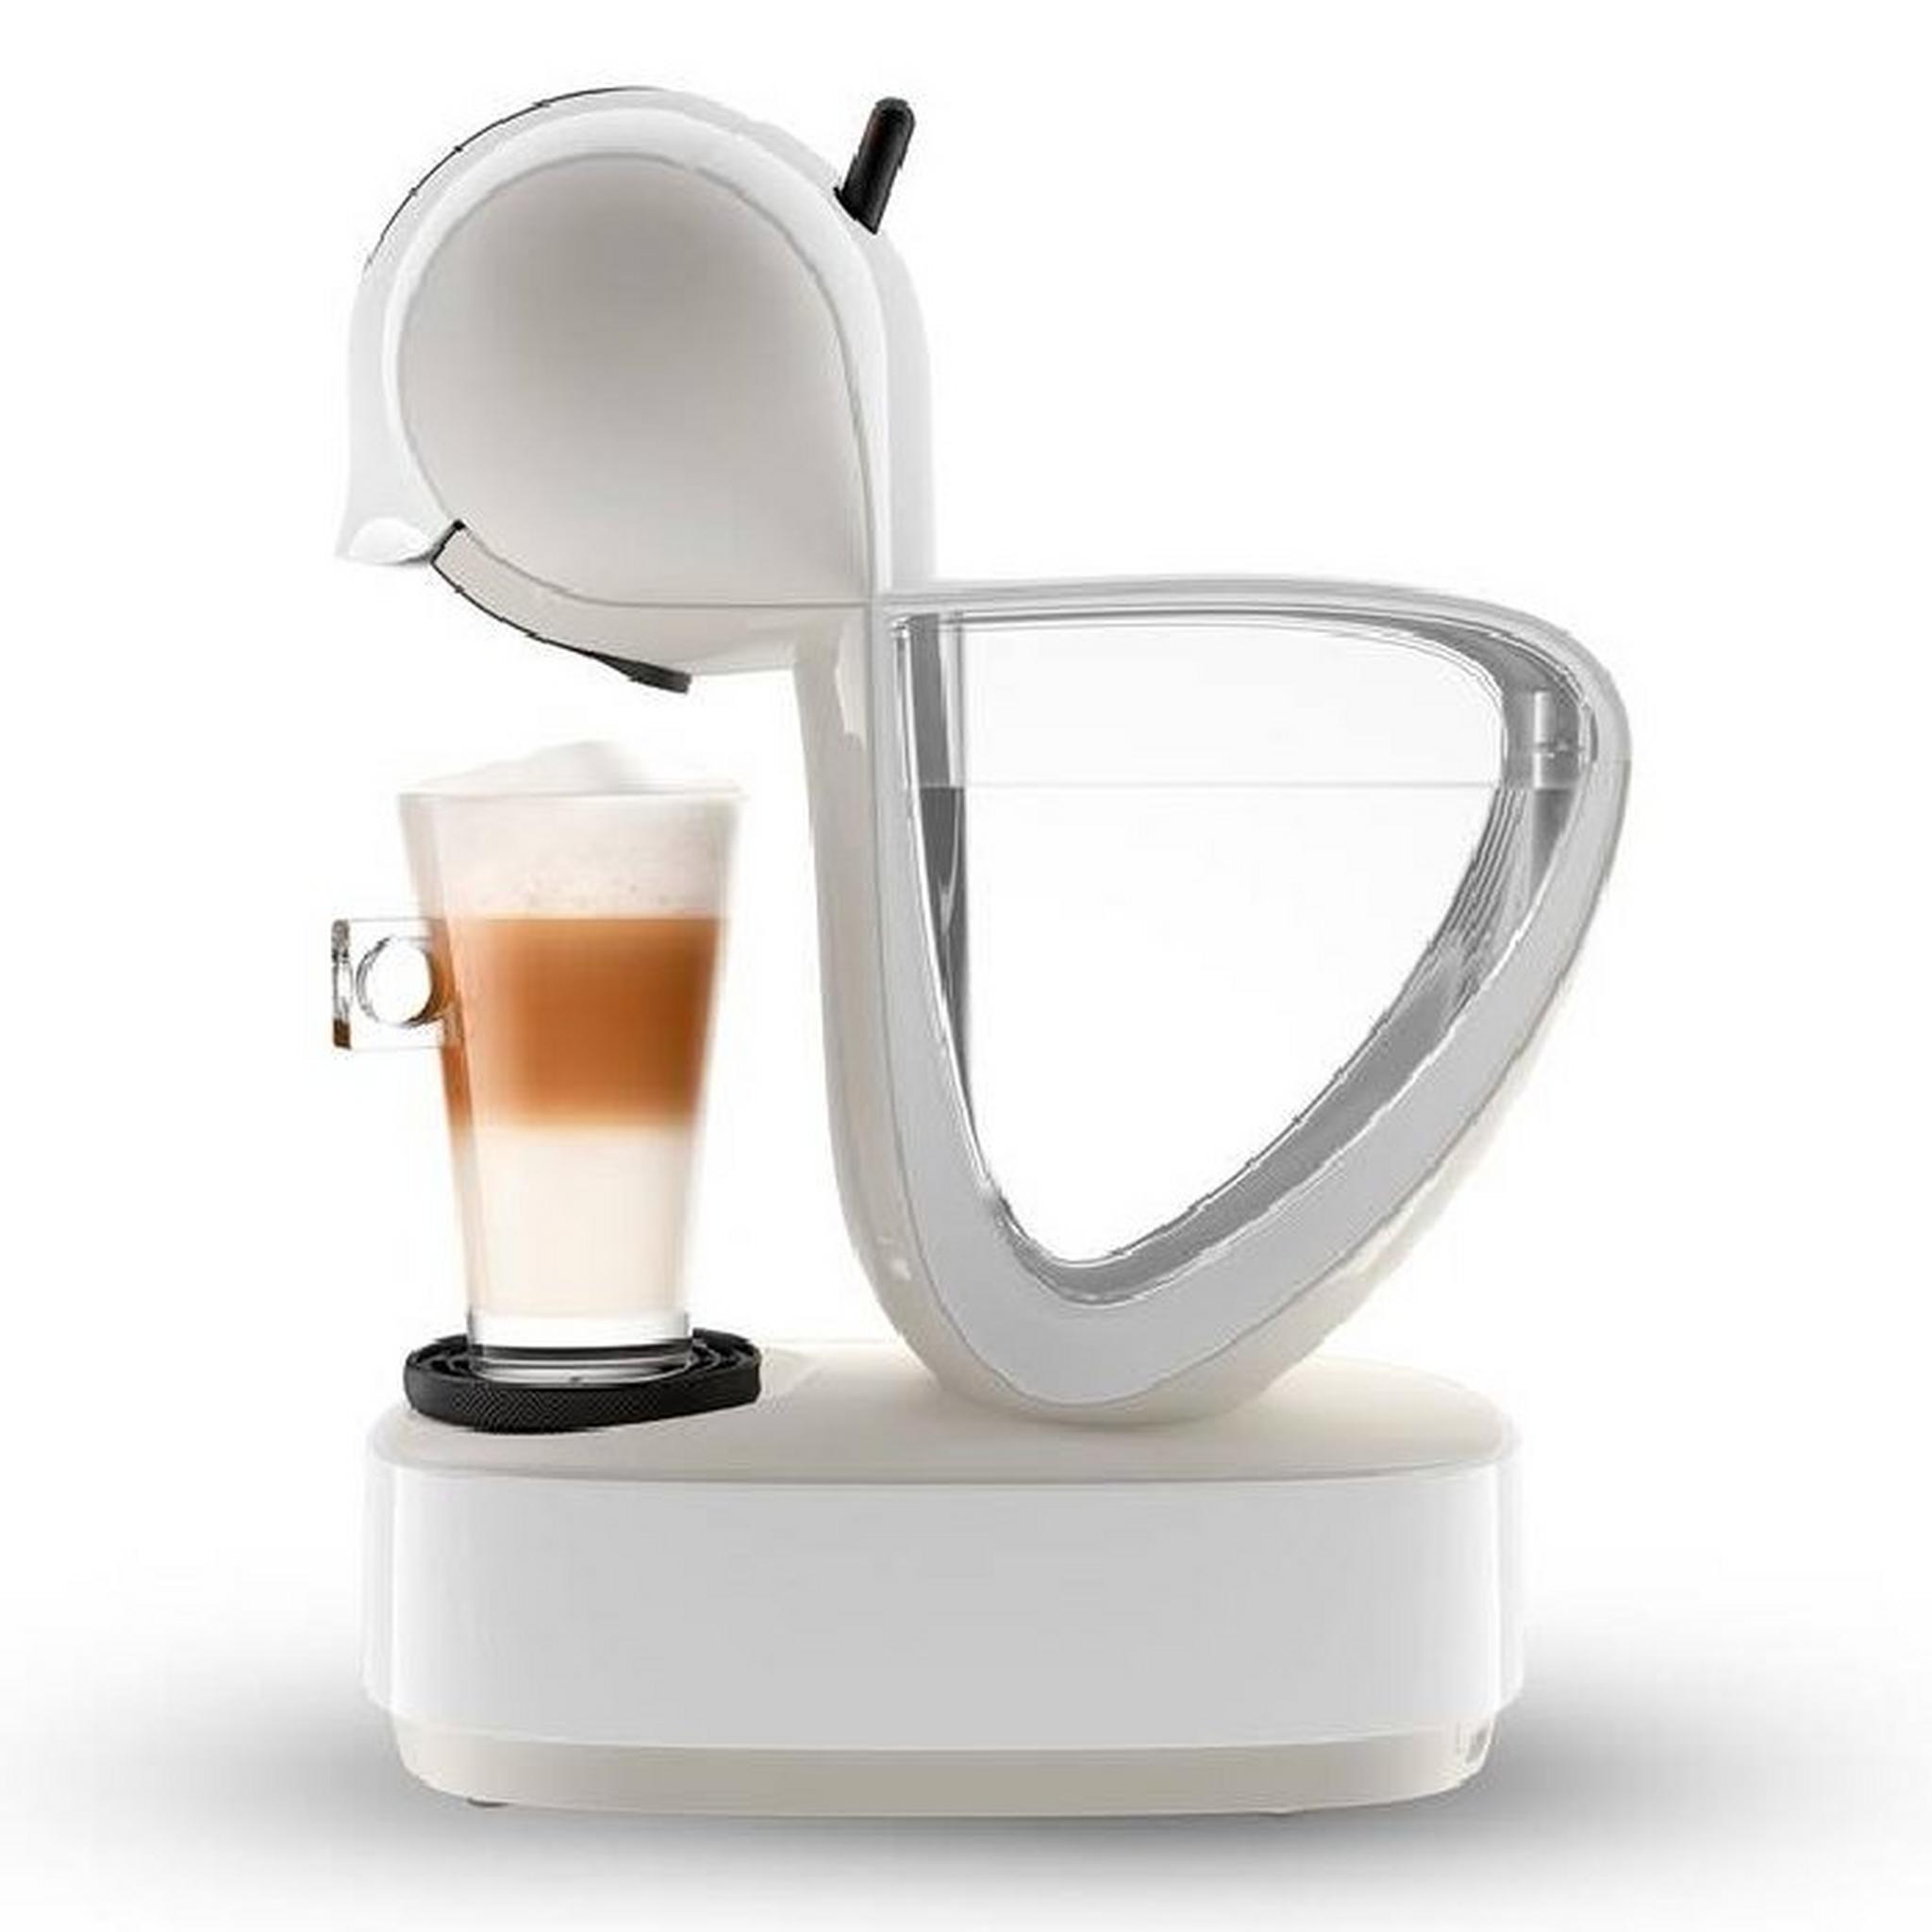 Delonghi Dolce Gusto Infinissima Coffee Maker, 1500W, 1.2L, EDG268.W - White